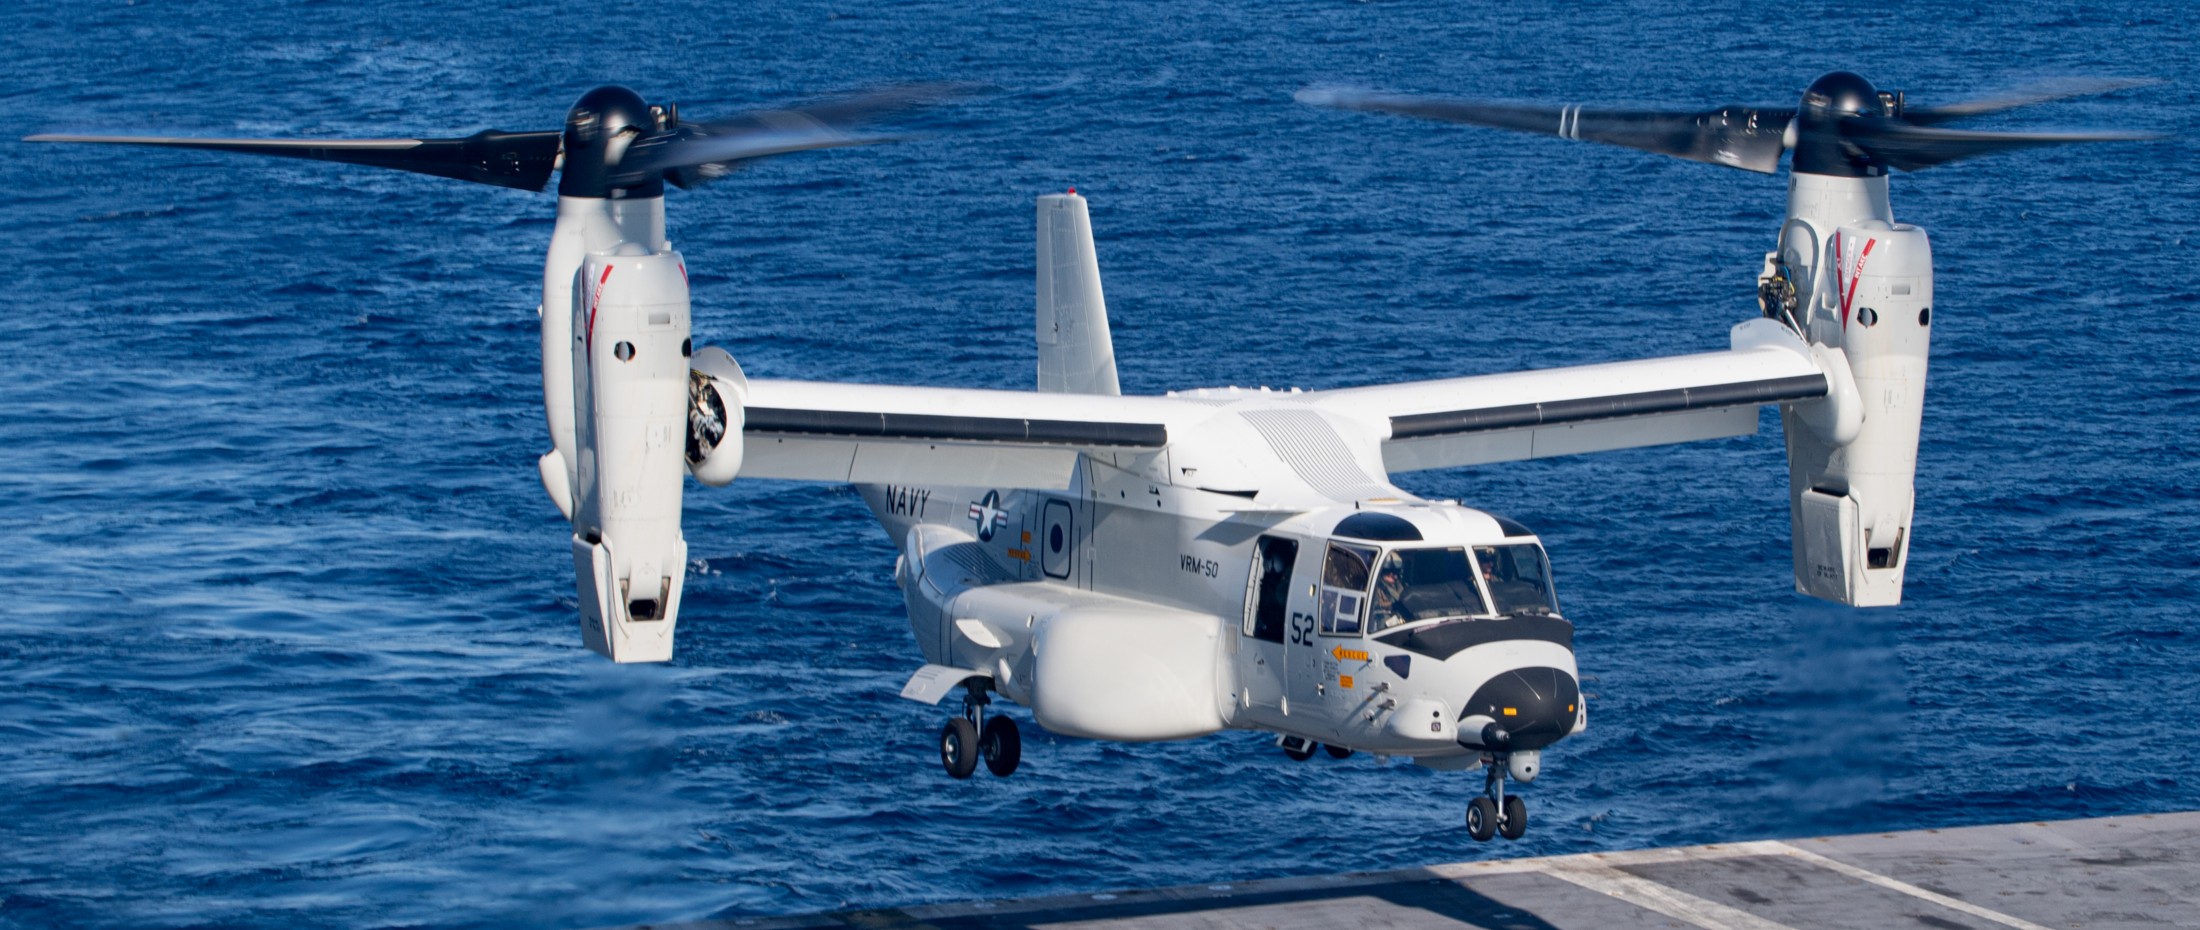 vrm-50 sun hawks fleet logistics multi mission squadron us navy bell boeing cmv-22b osprey replacement frs uss nimitz cvn-68 20